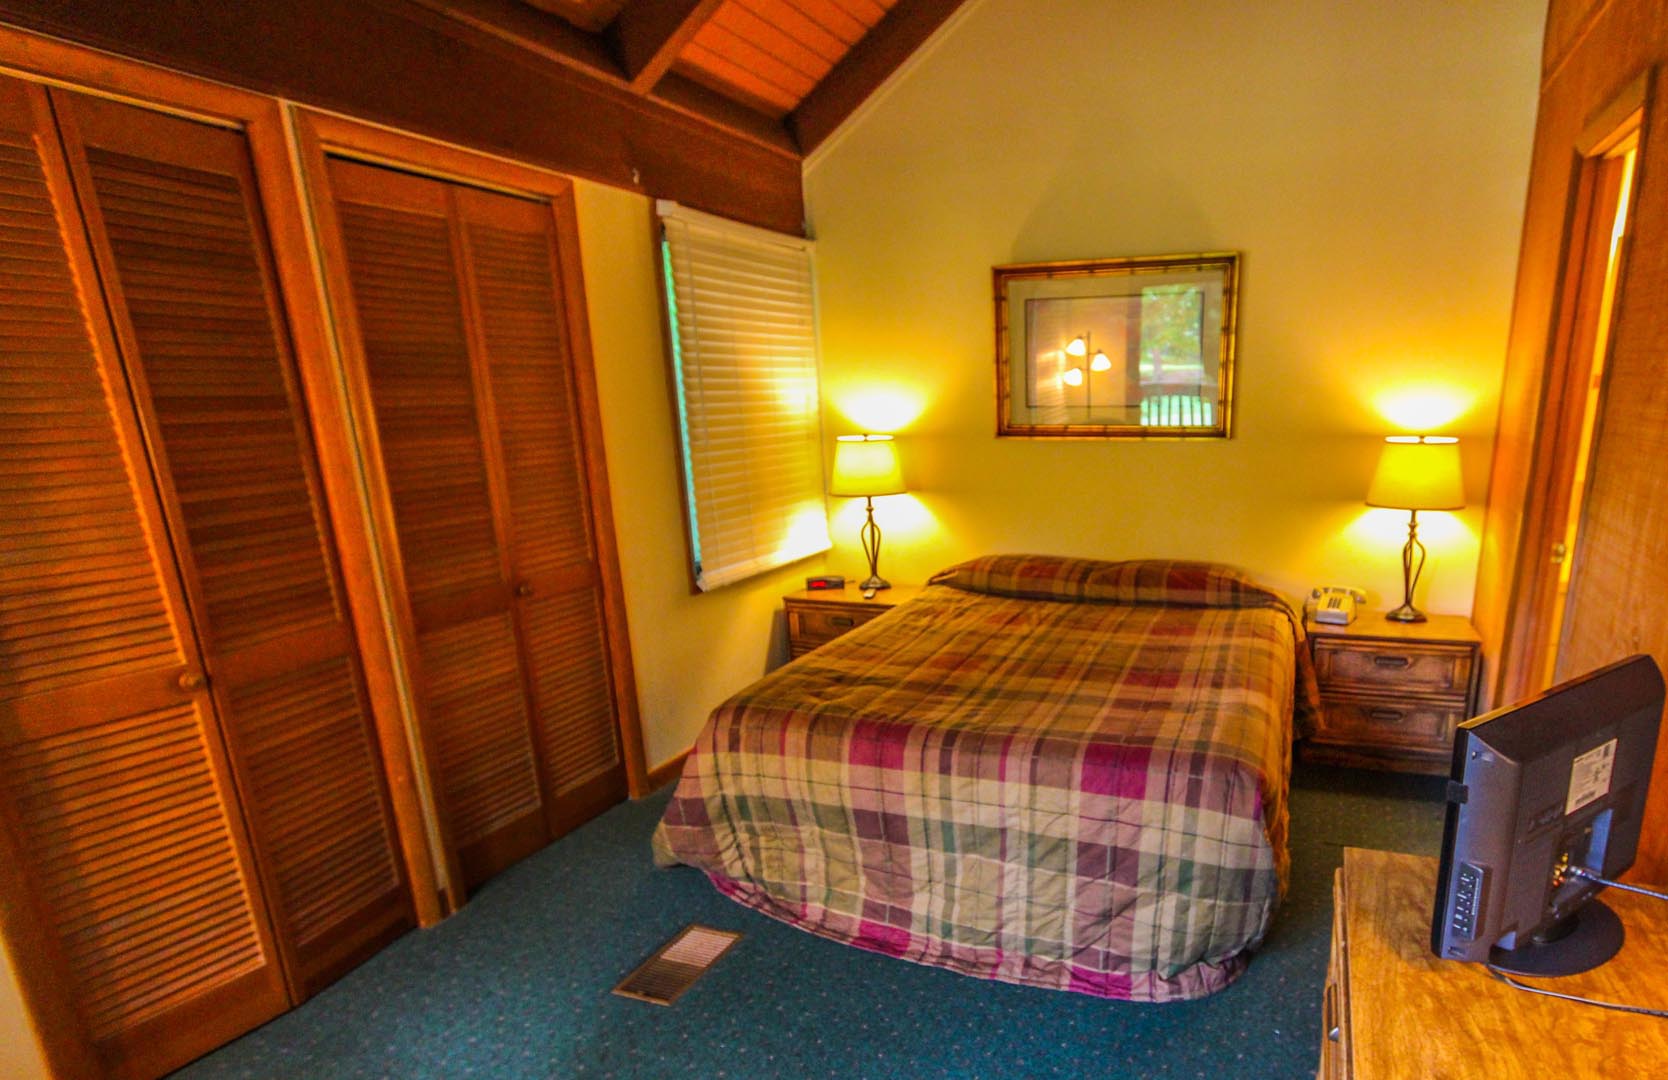 A cozy bedroom at VRI's Golf Club Villas in Marble Hill, Georgia.